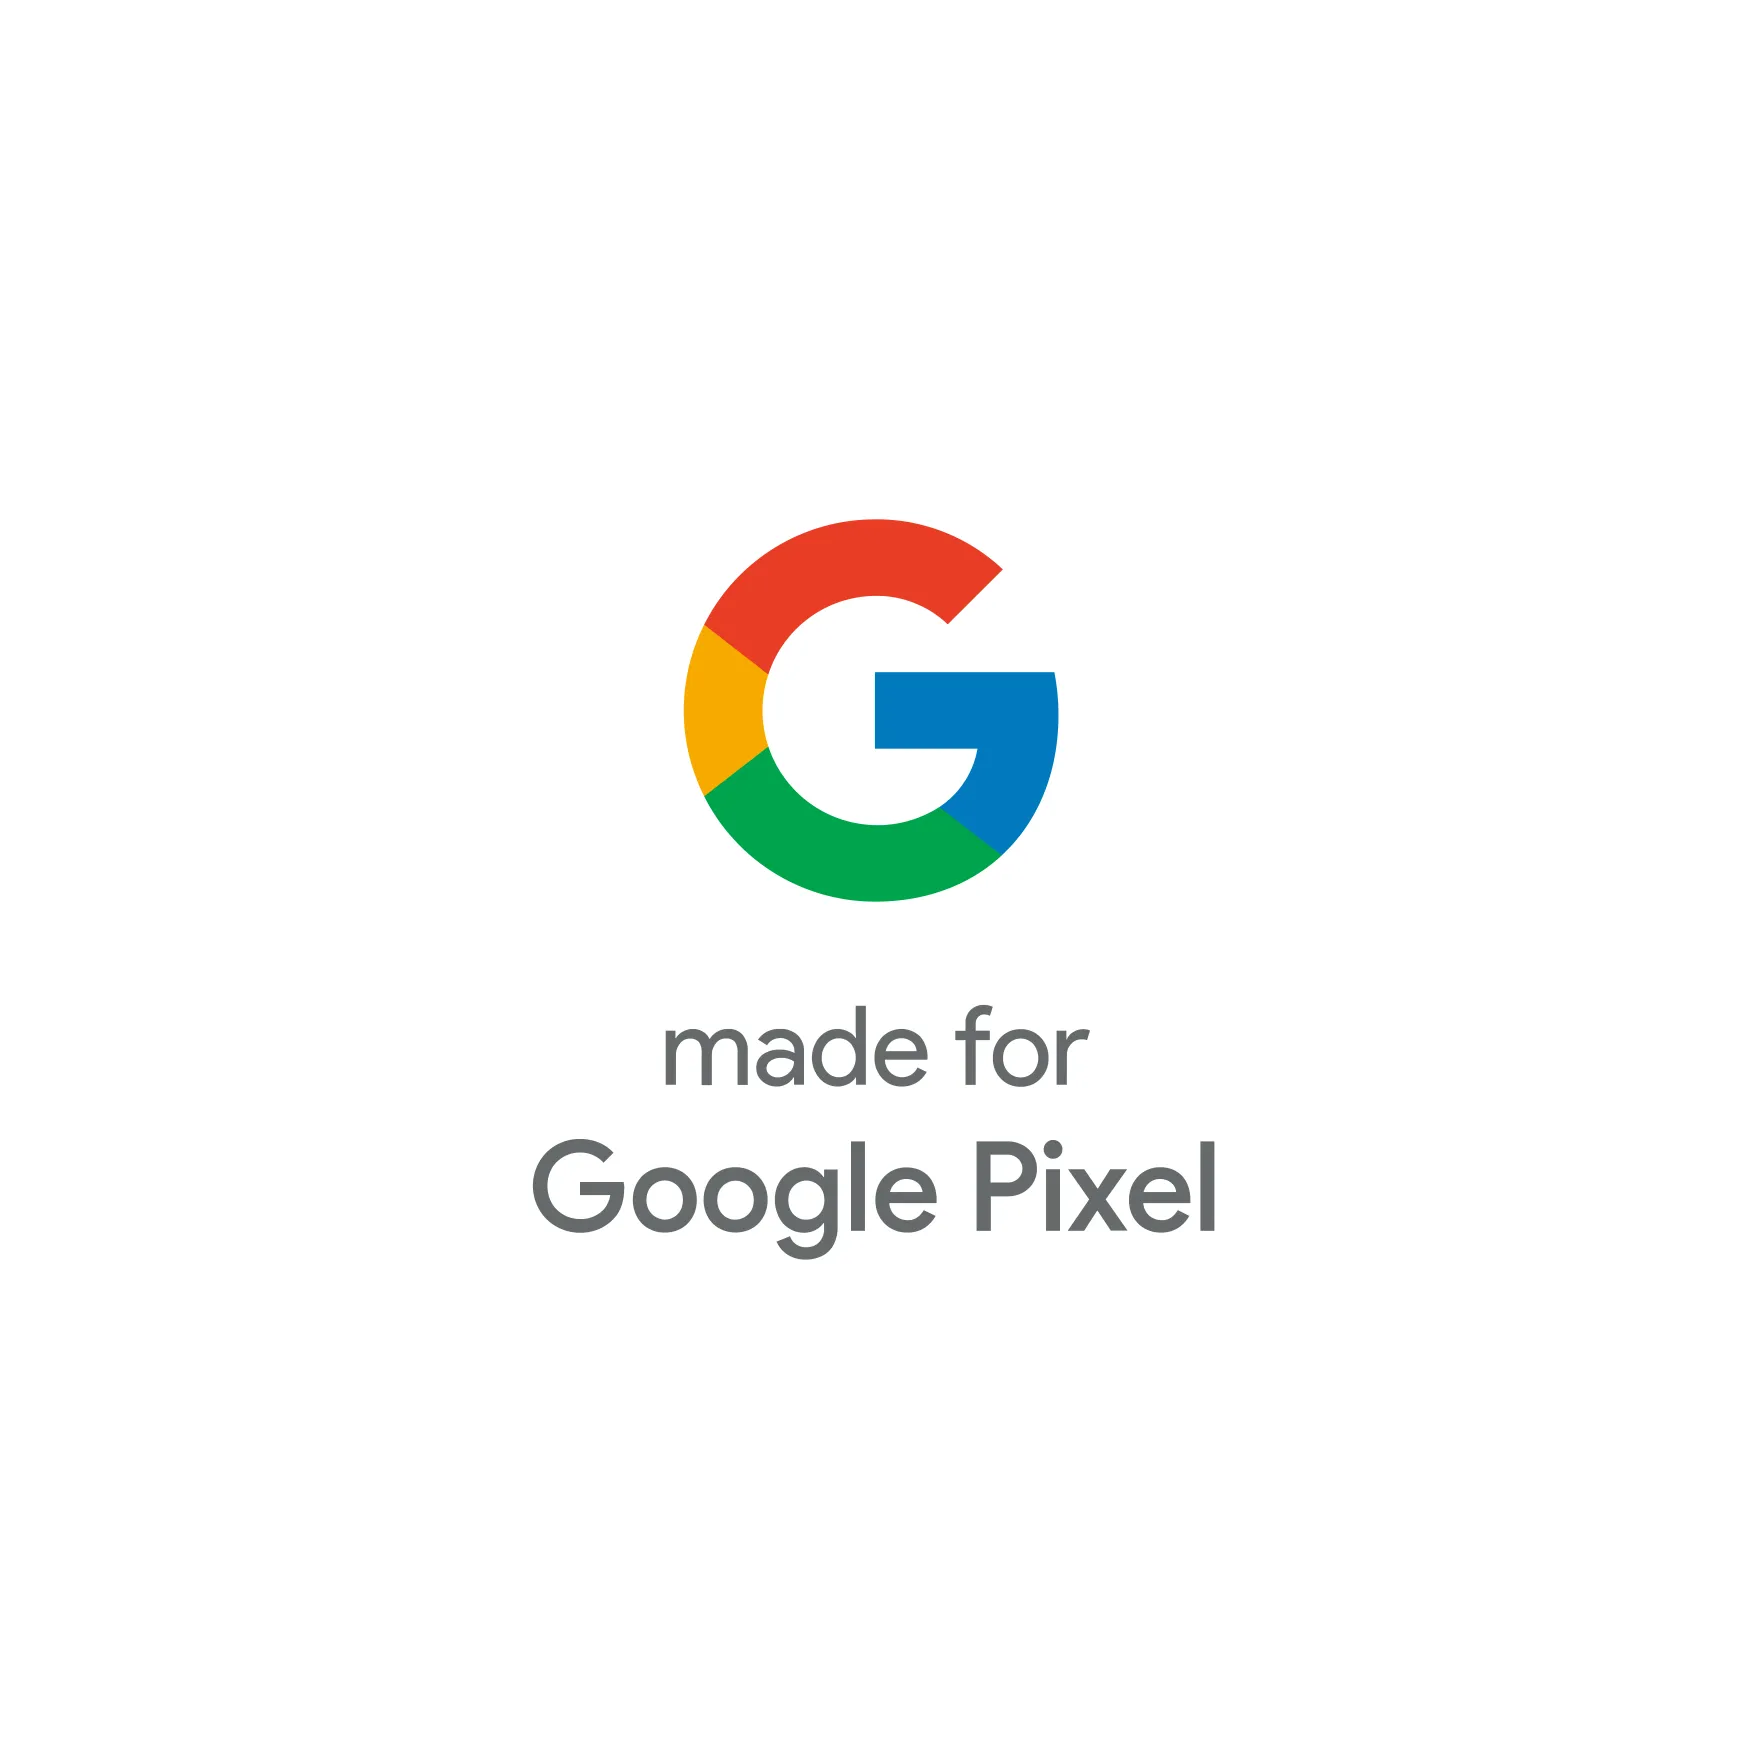 Pixel Perfect Logo by Paulius Kairevicius on Dribbble